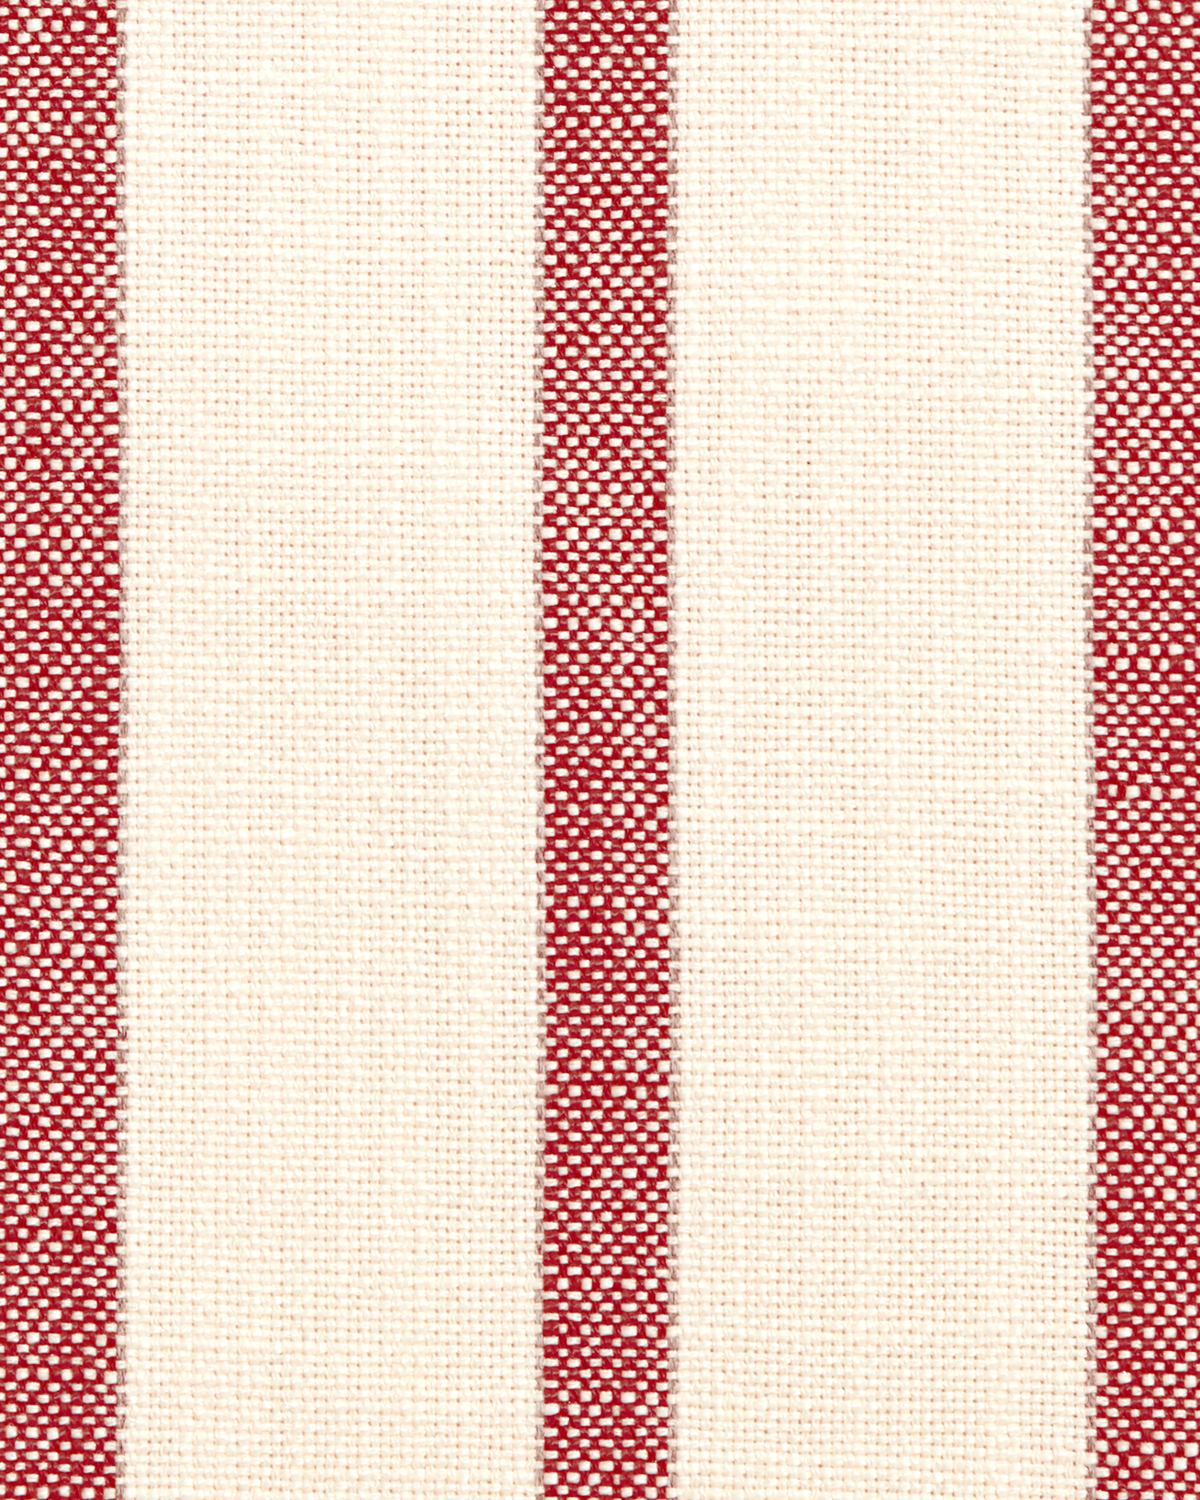 Market Stripe Fabric in Red